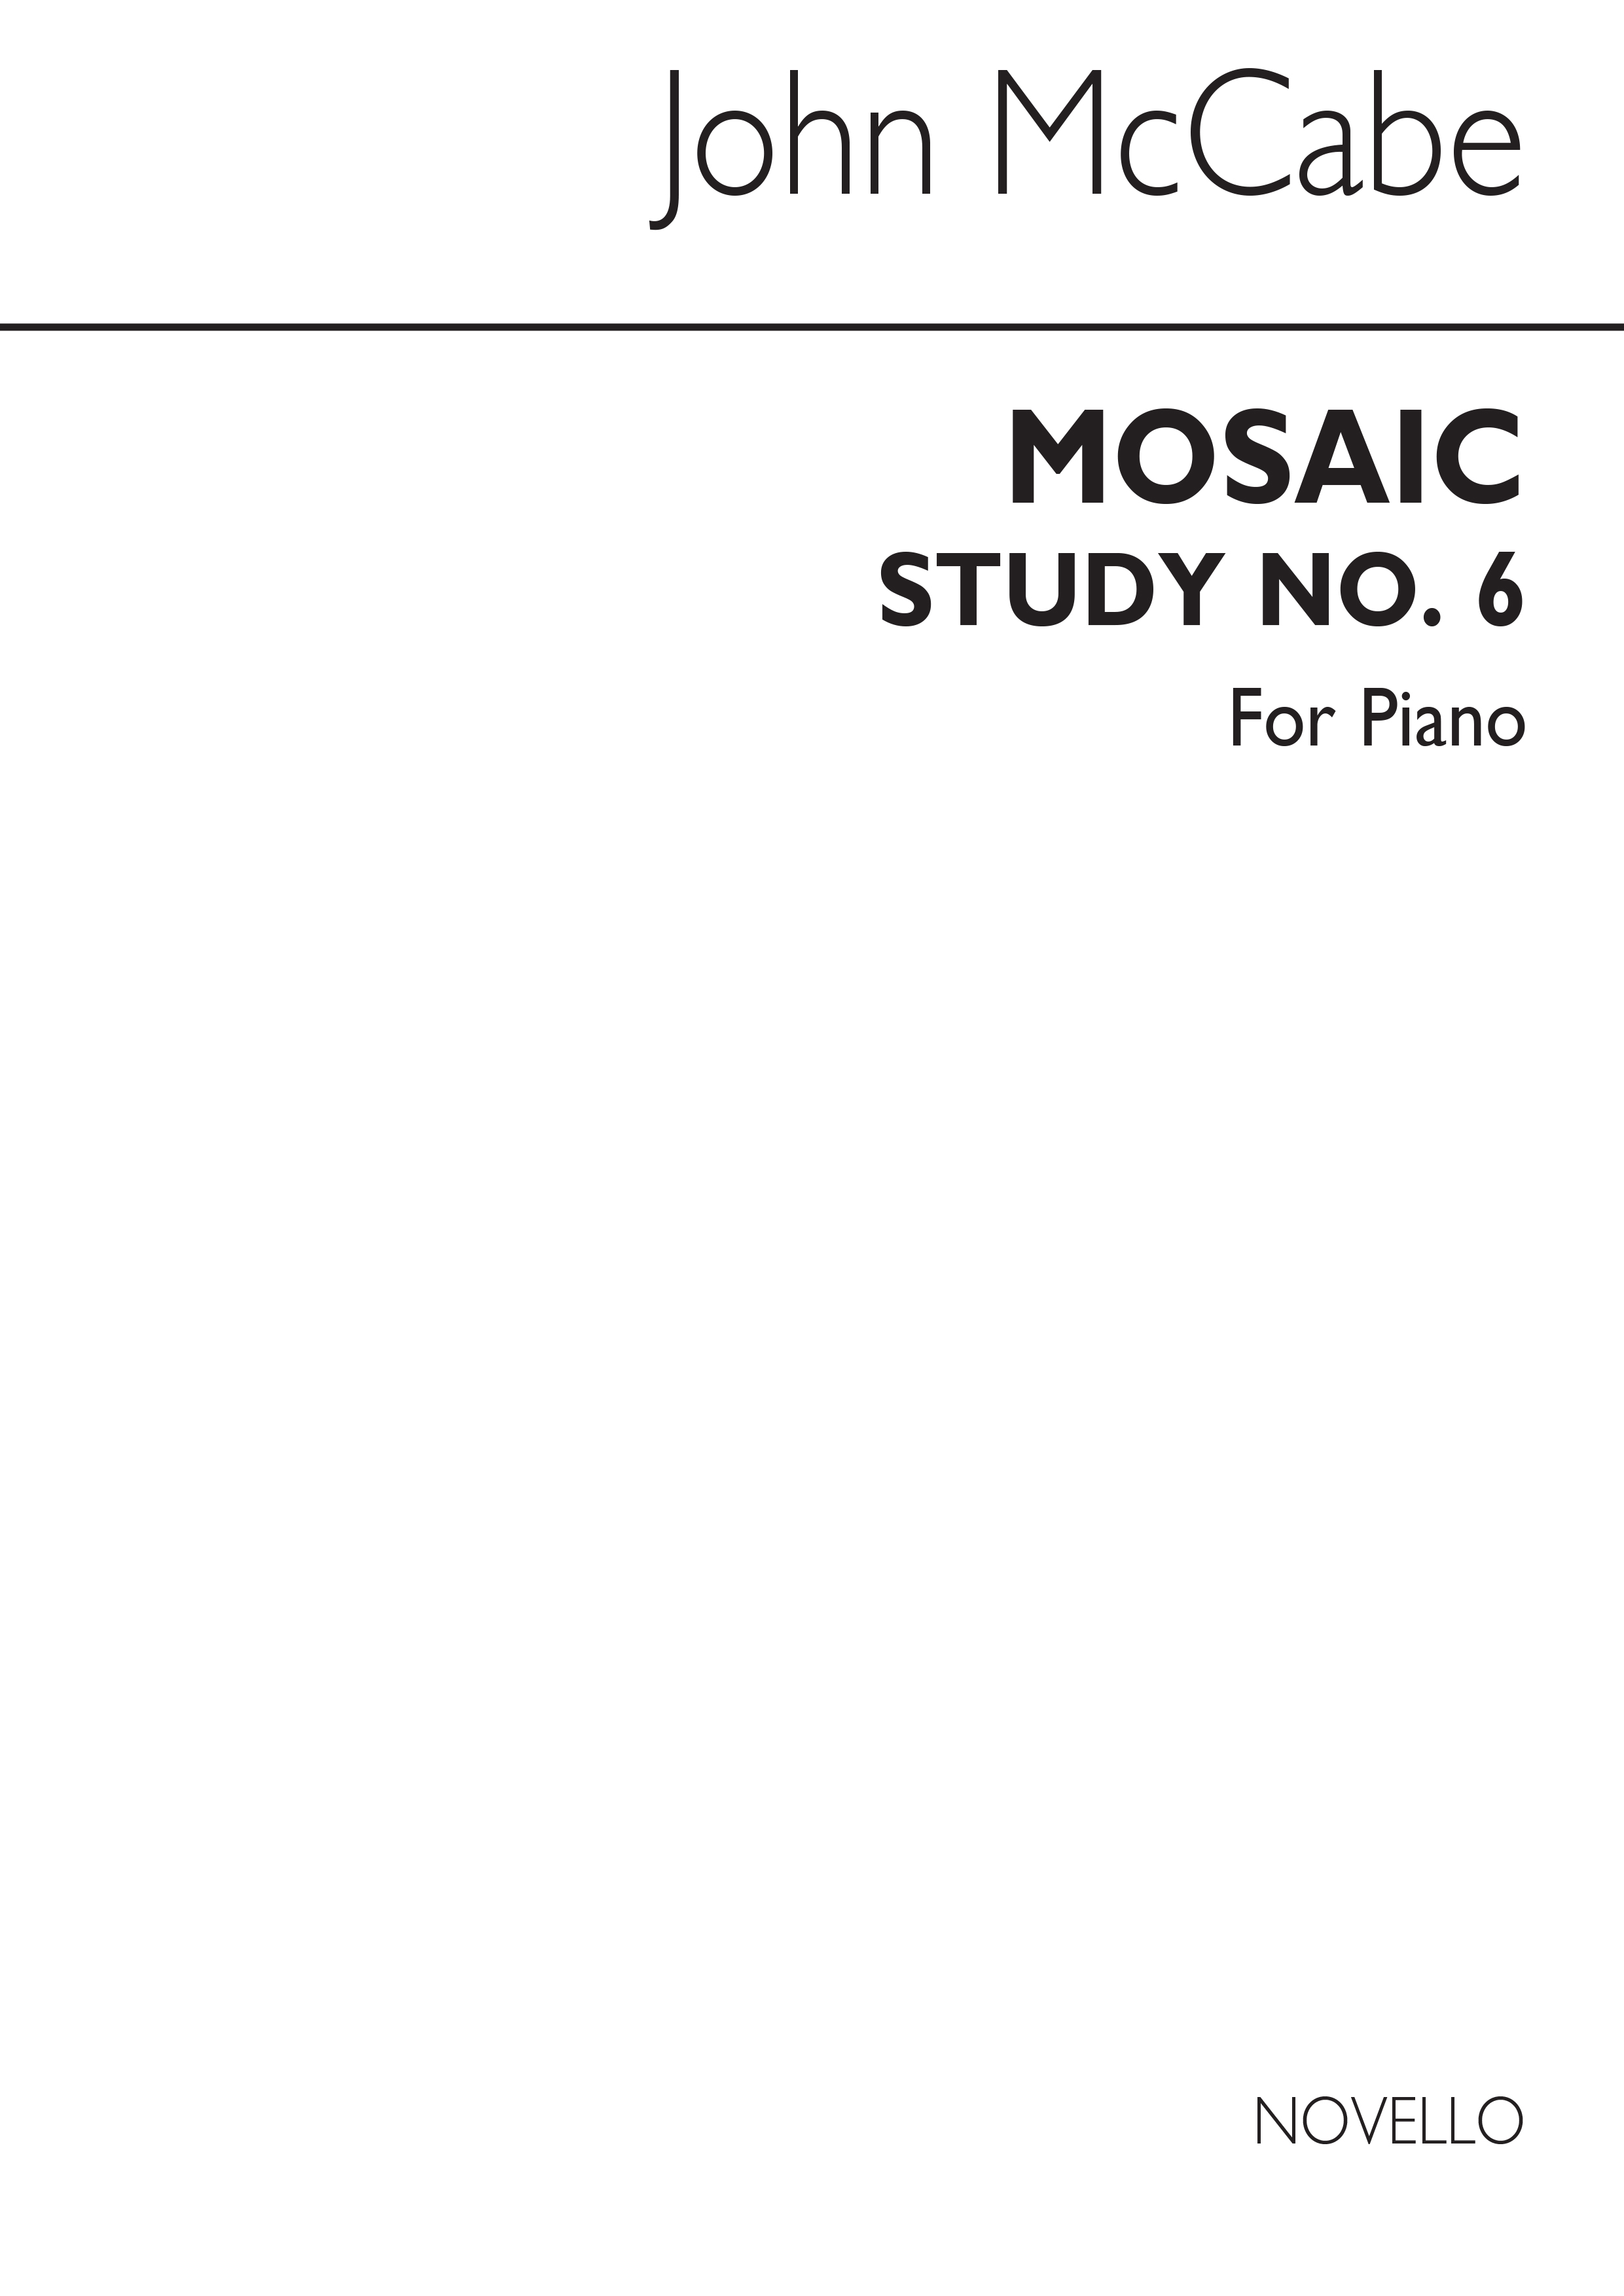 McCabe: Mosaic Study No.6 for Piano